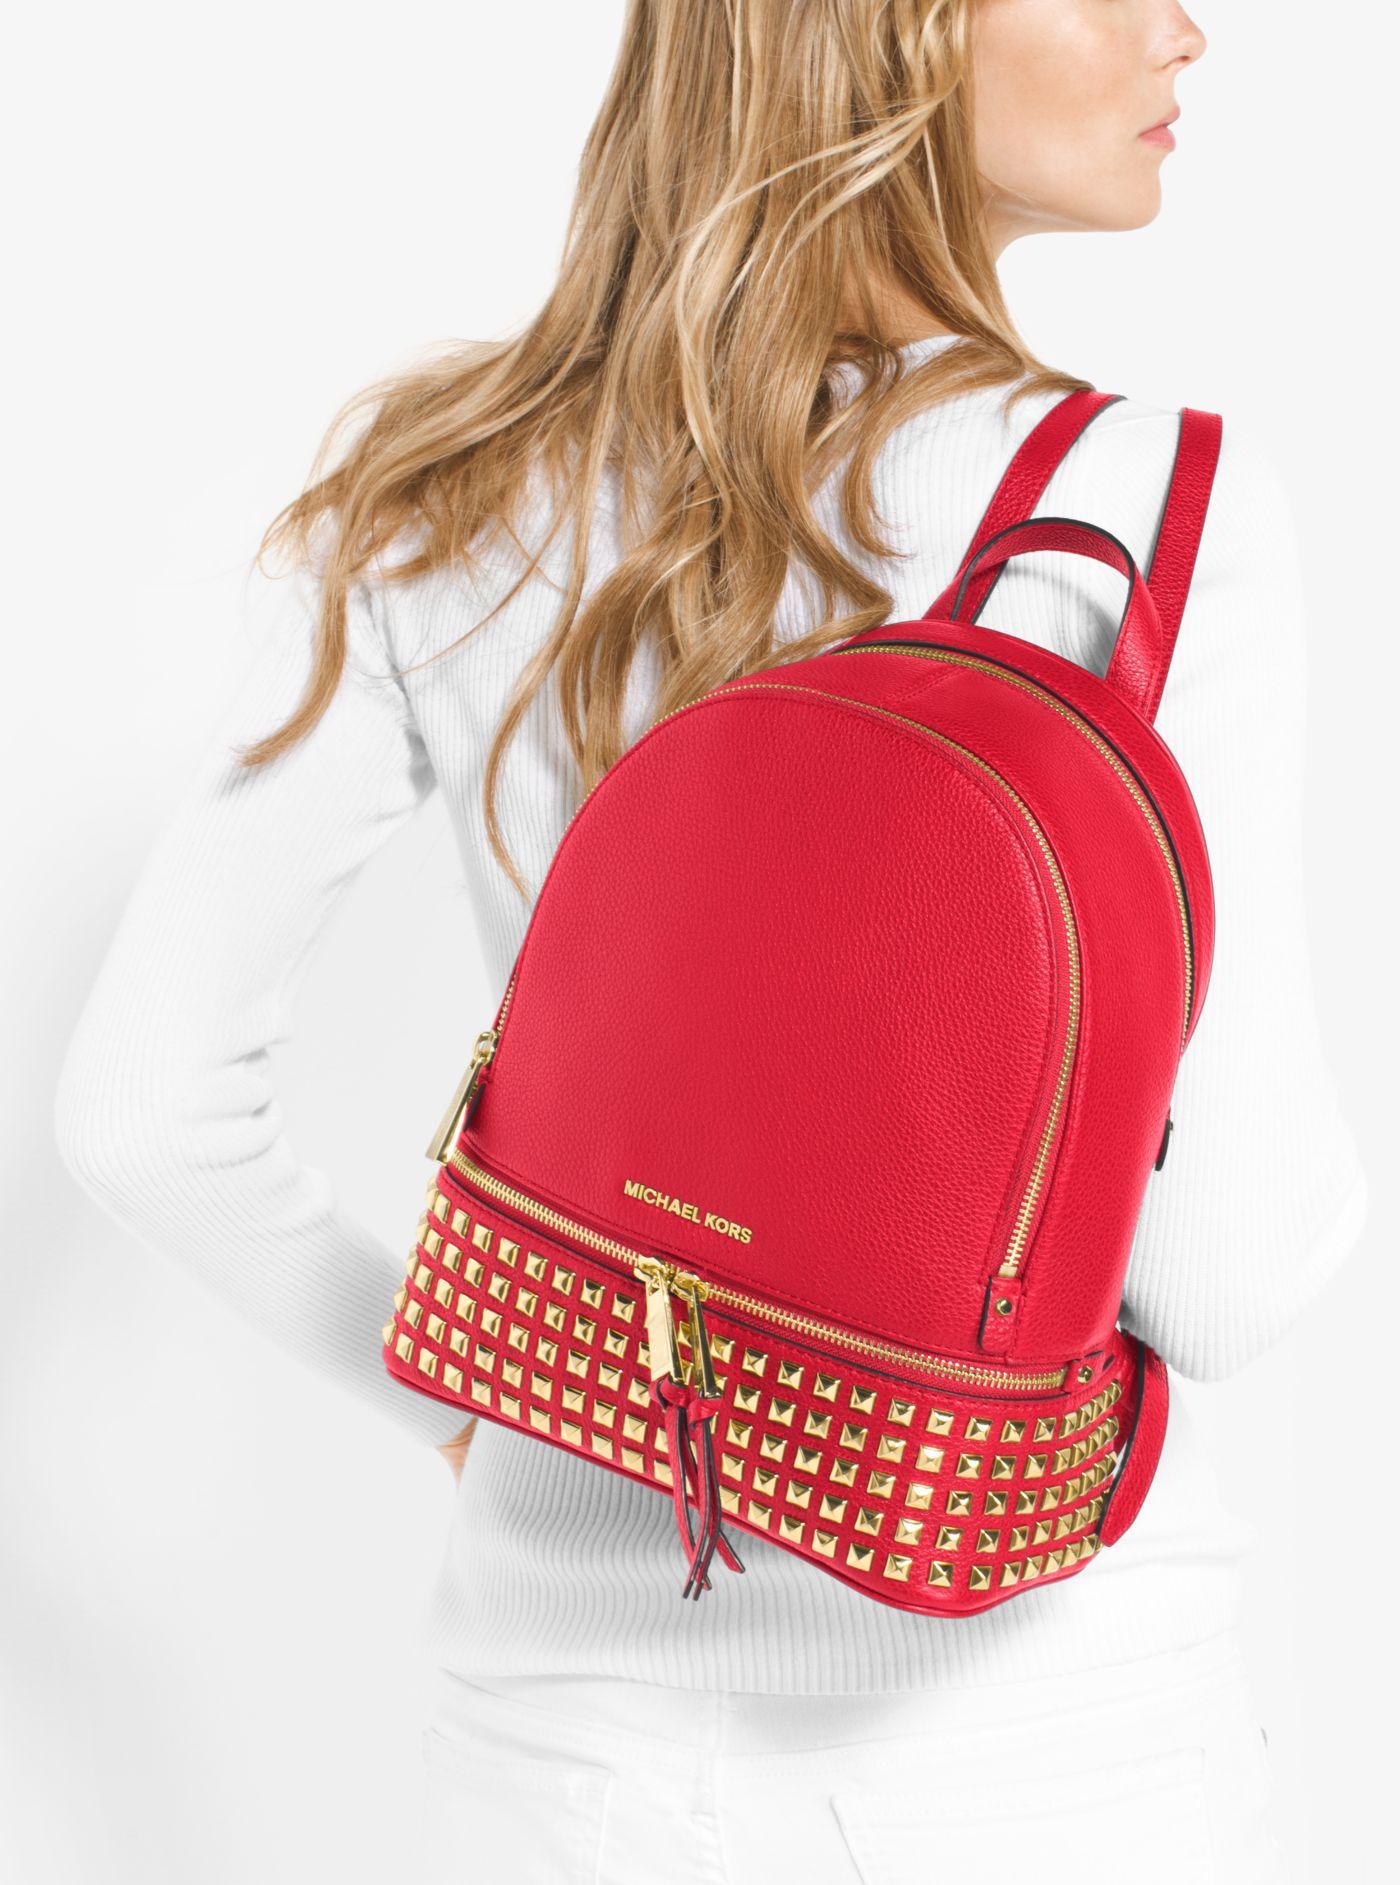 michael kors red studded backpack